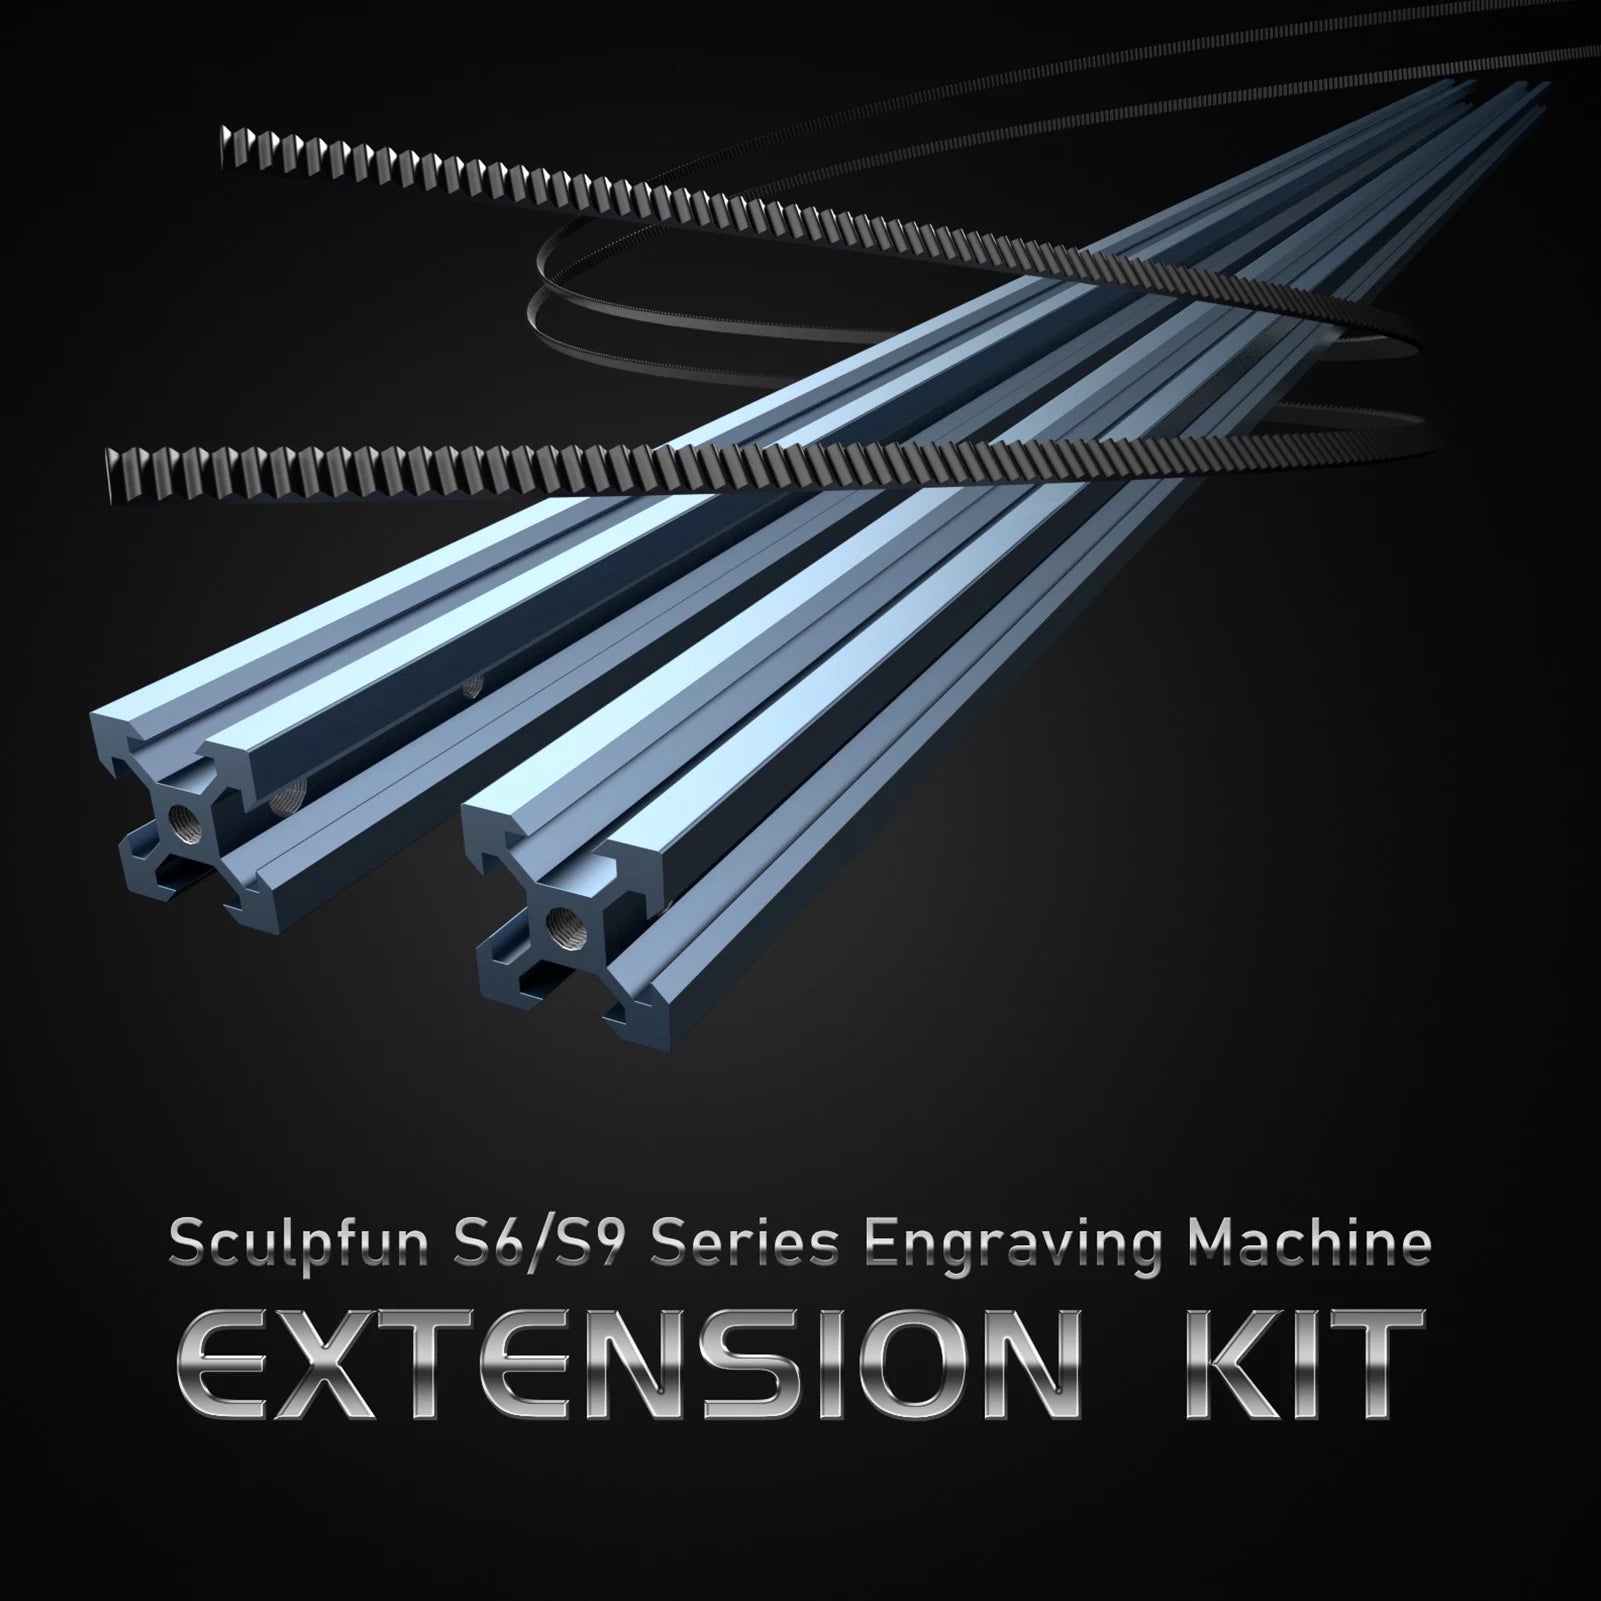 expansion kit for sculpfun s9 laser engraver